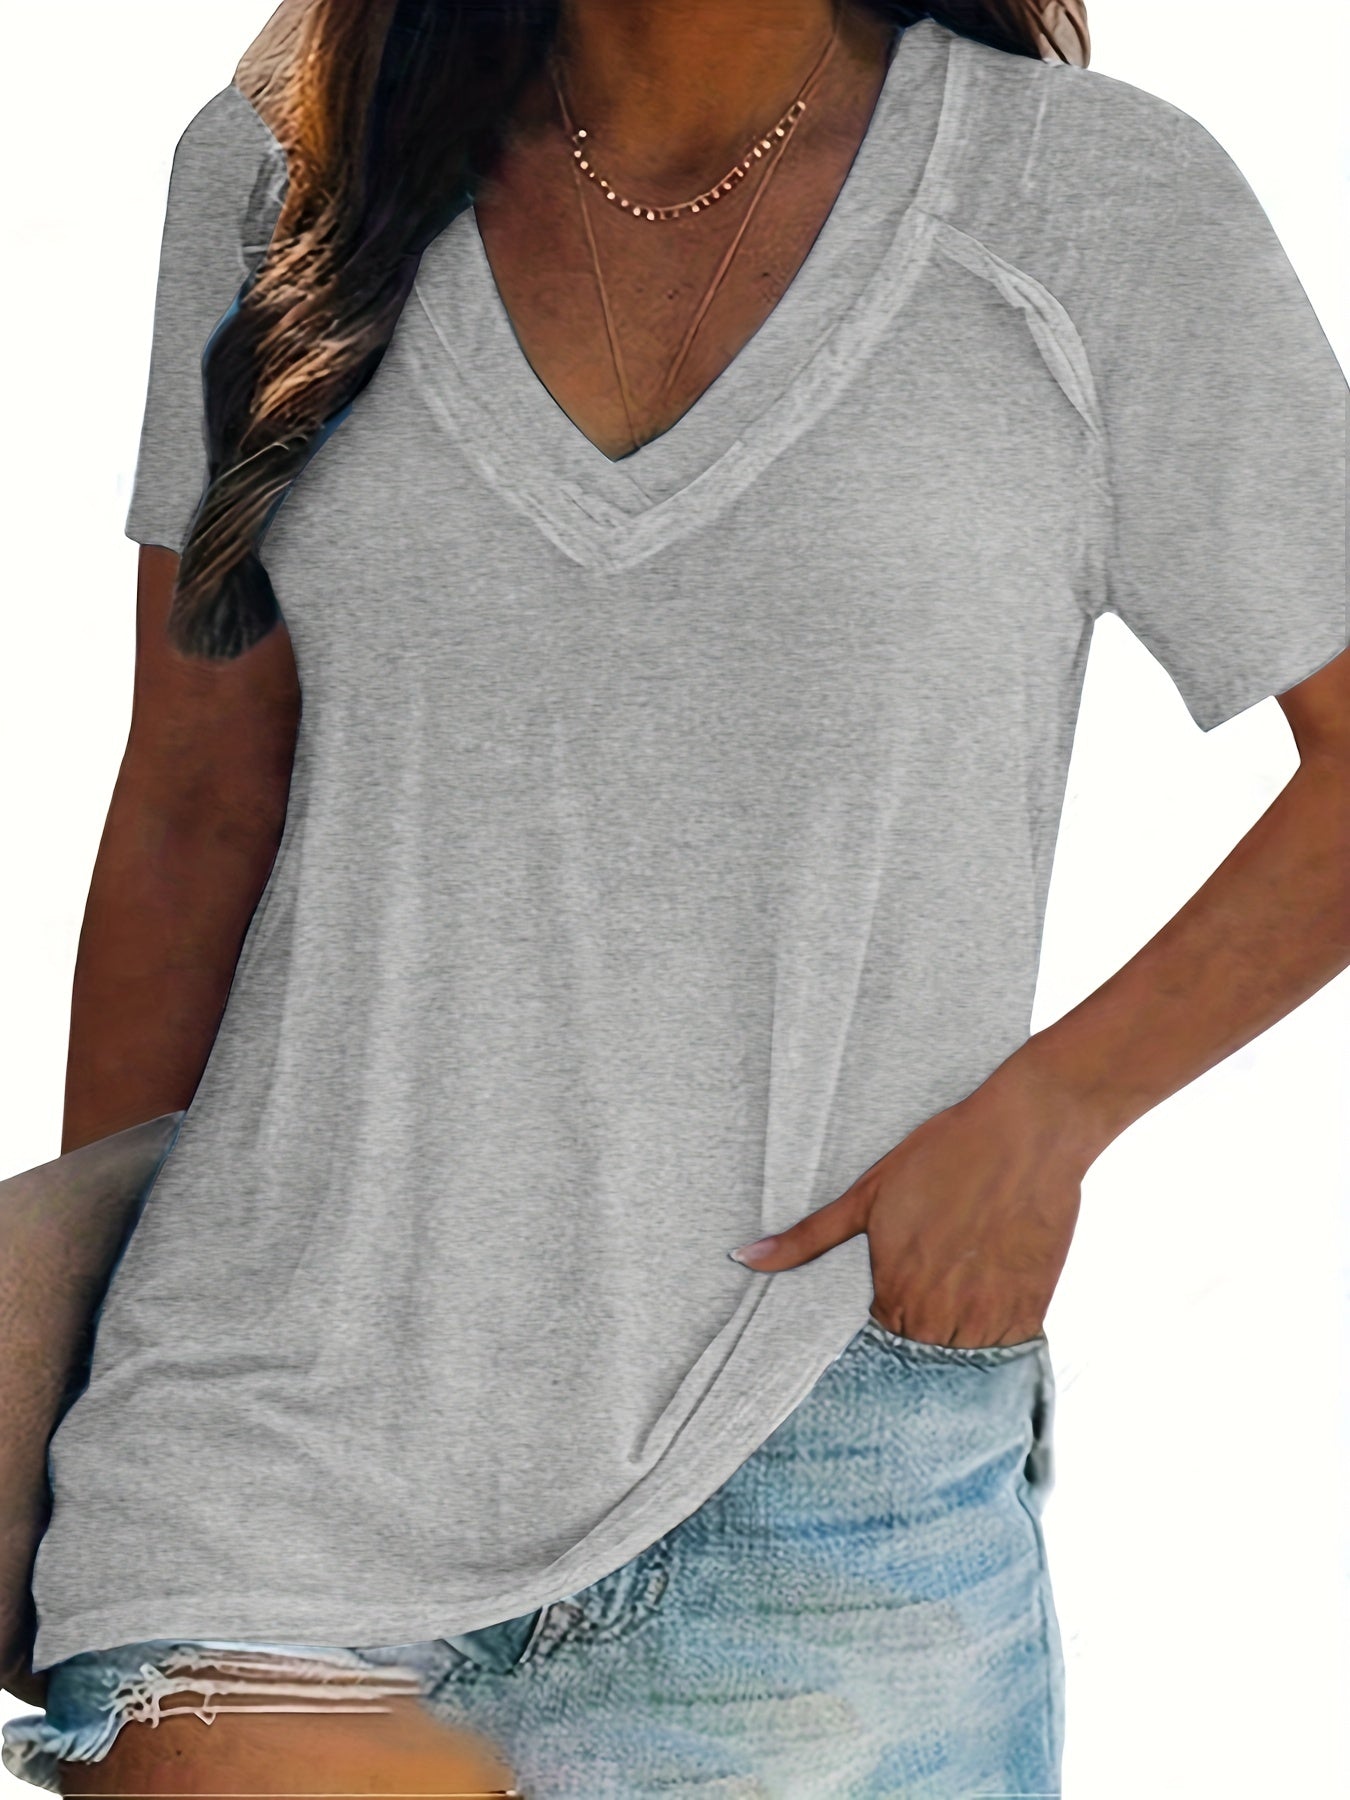 Vzyzv Versatile Solid V Neck T-Shirt, Casual Short Sleeve T-Shirt For Spring & Summer, Women's Clothing